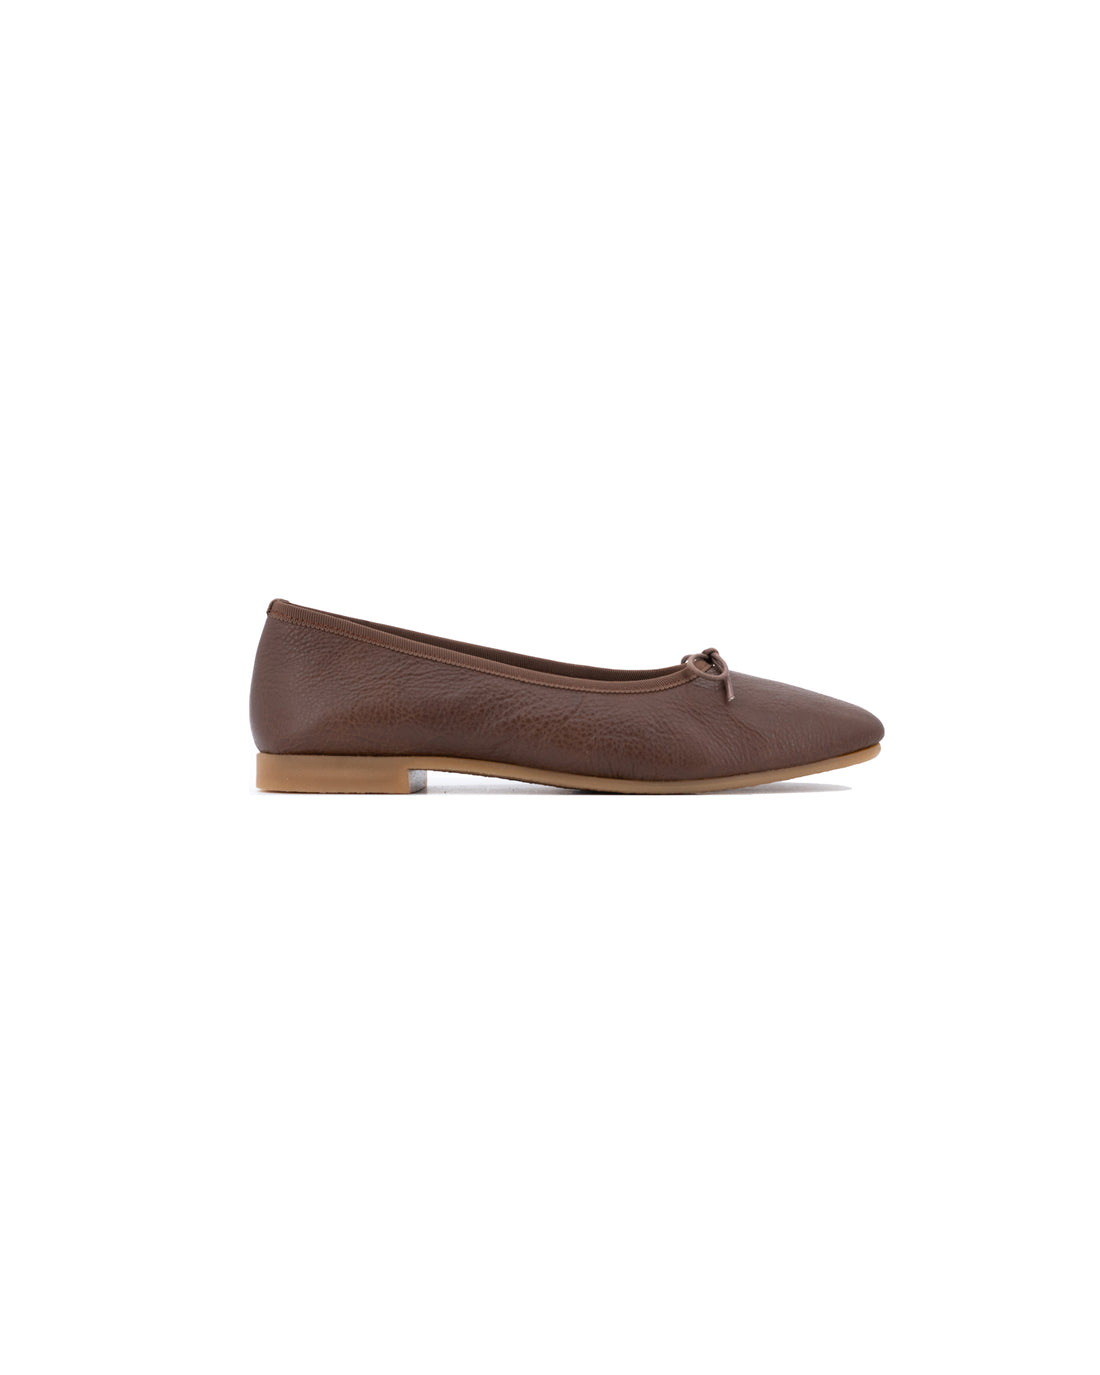 Flora Ballet Shoes - Walnut Brown